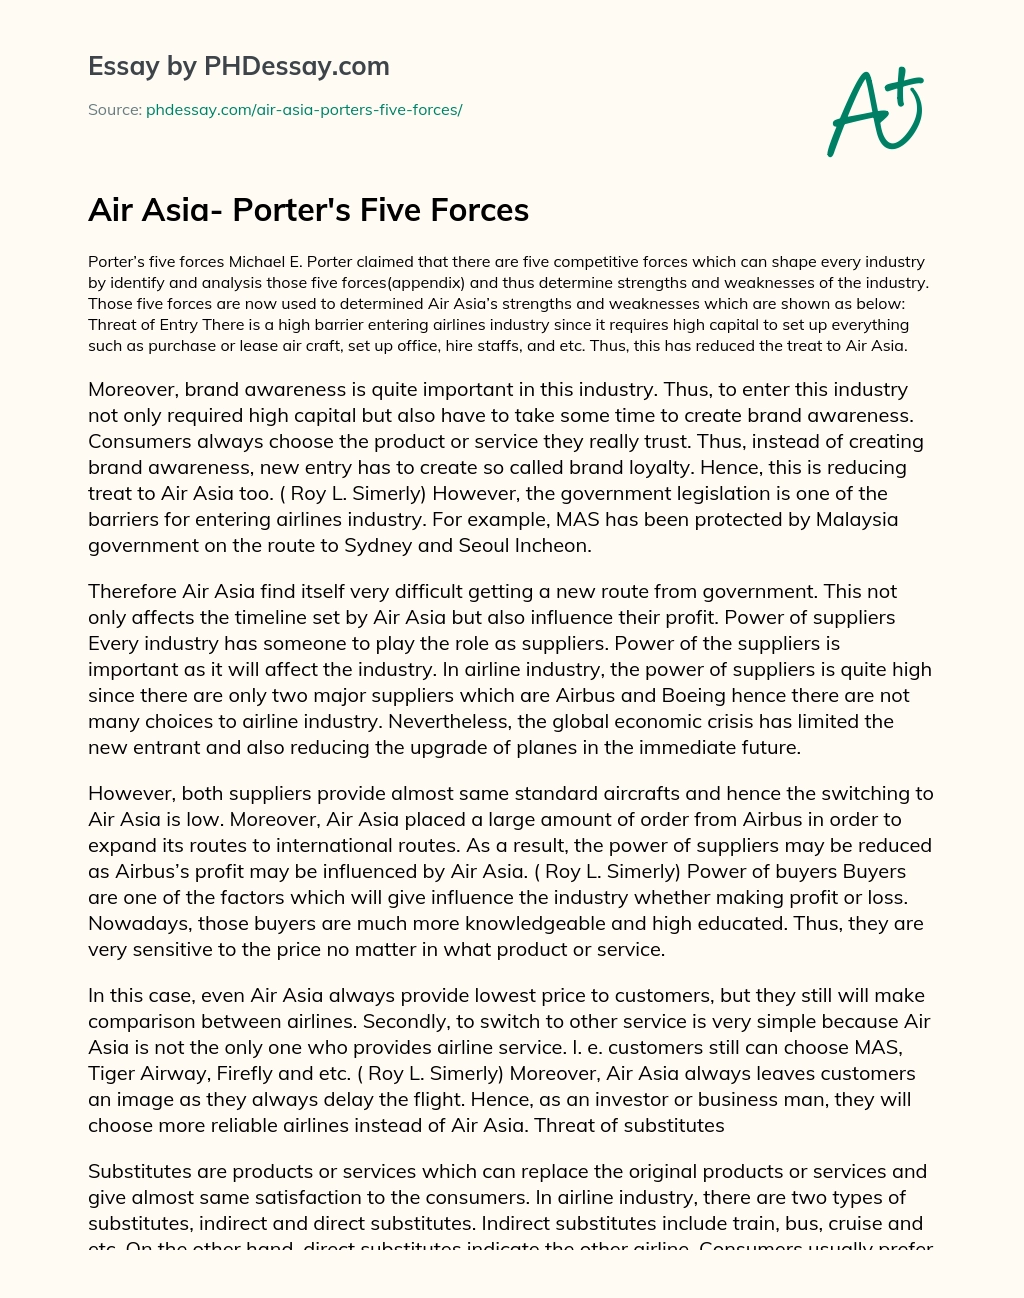 Air Asia- Porter’s Five Forces essay